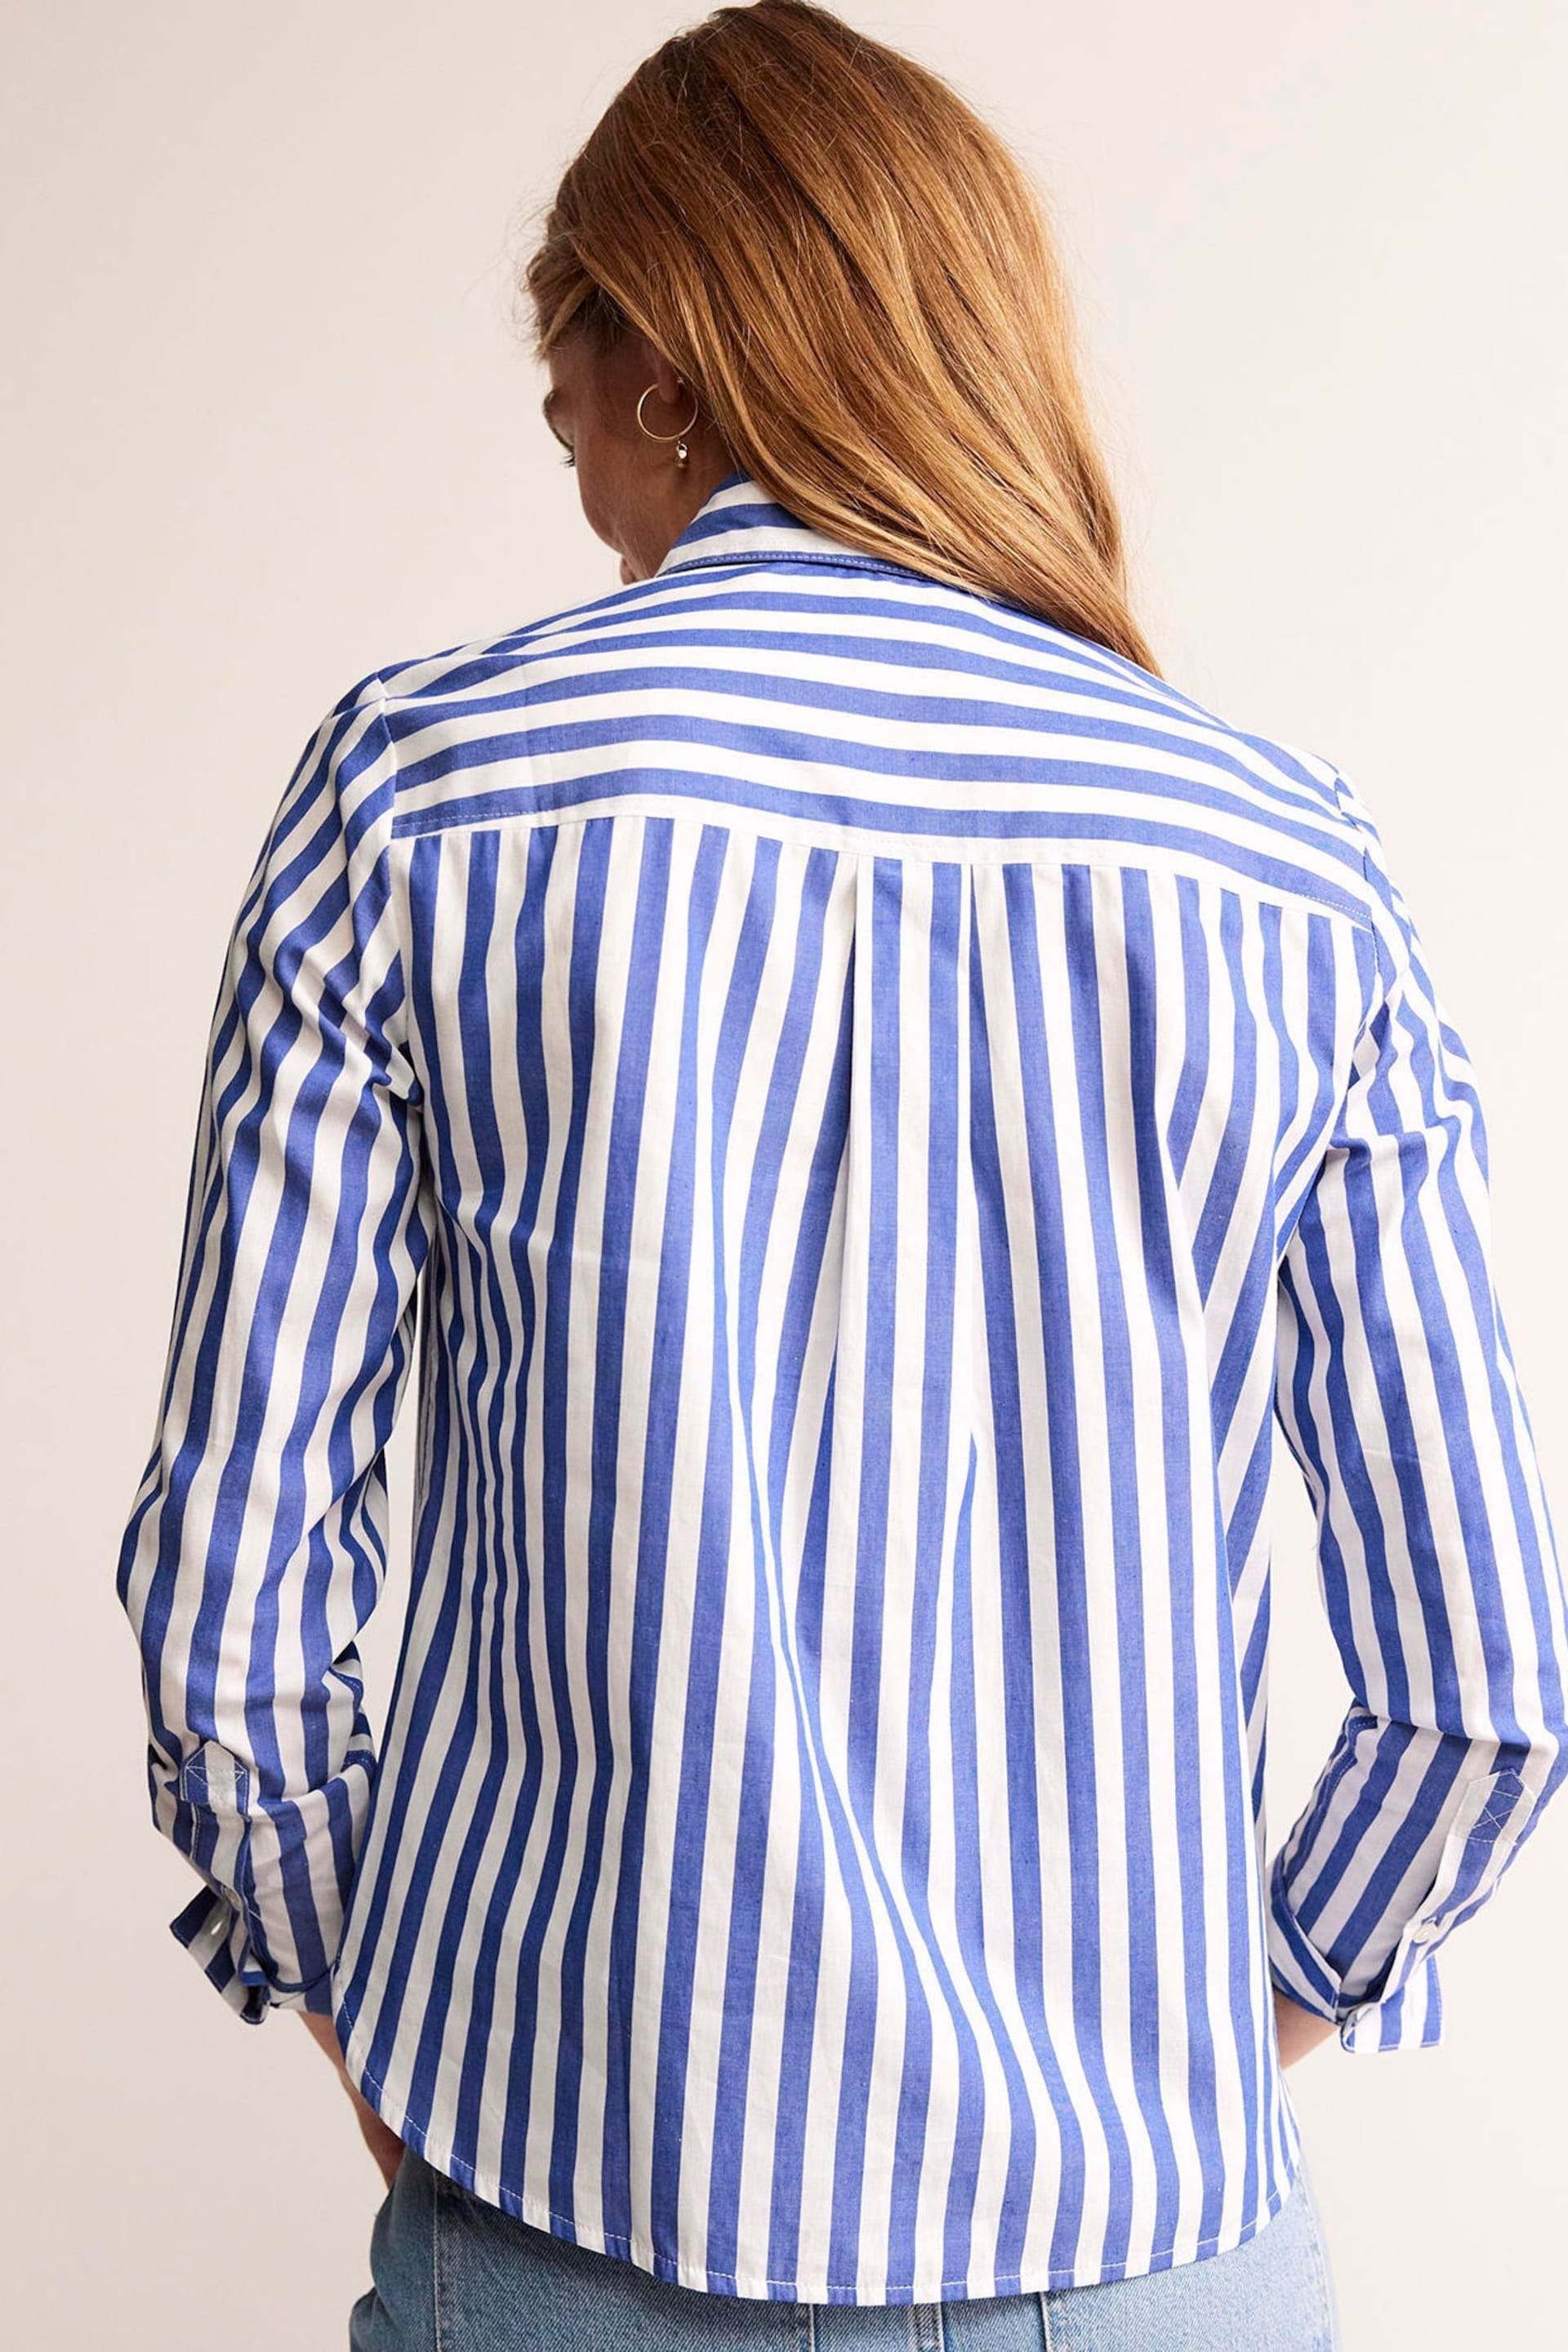 Boden Blue Sienna Cotton Shirt - Image 2 of 6